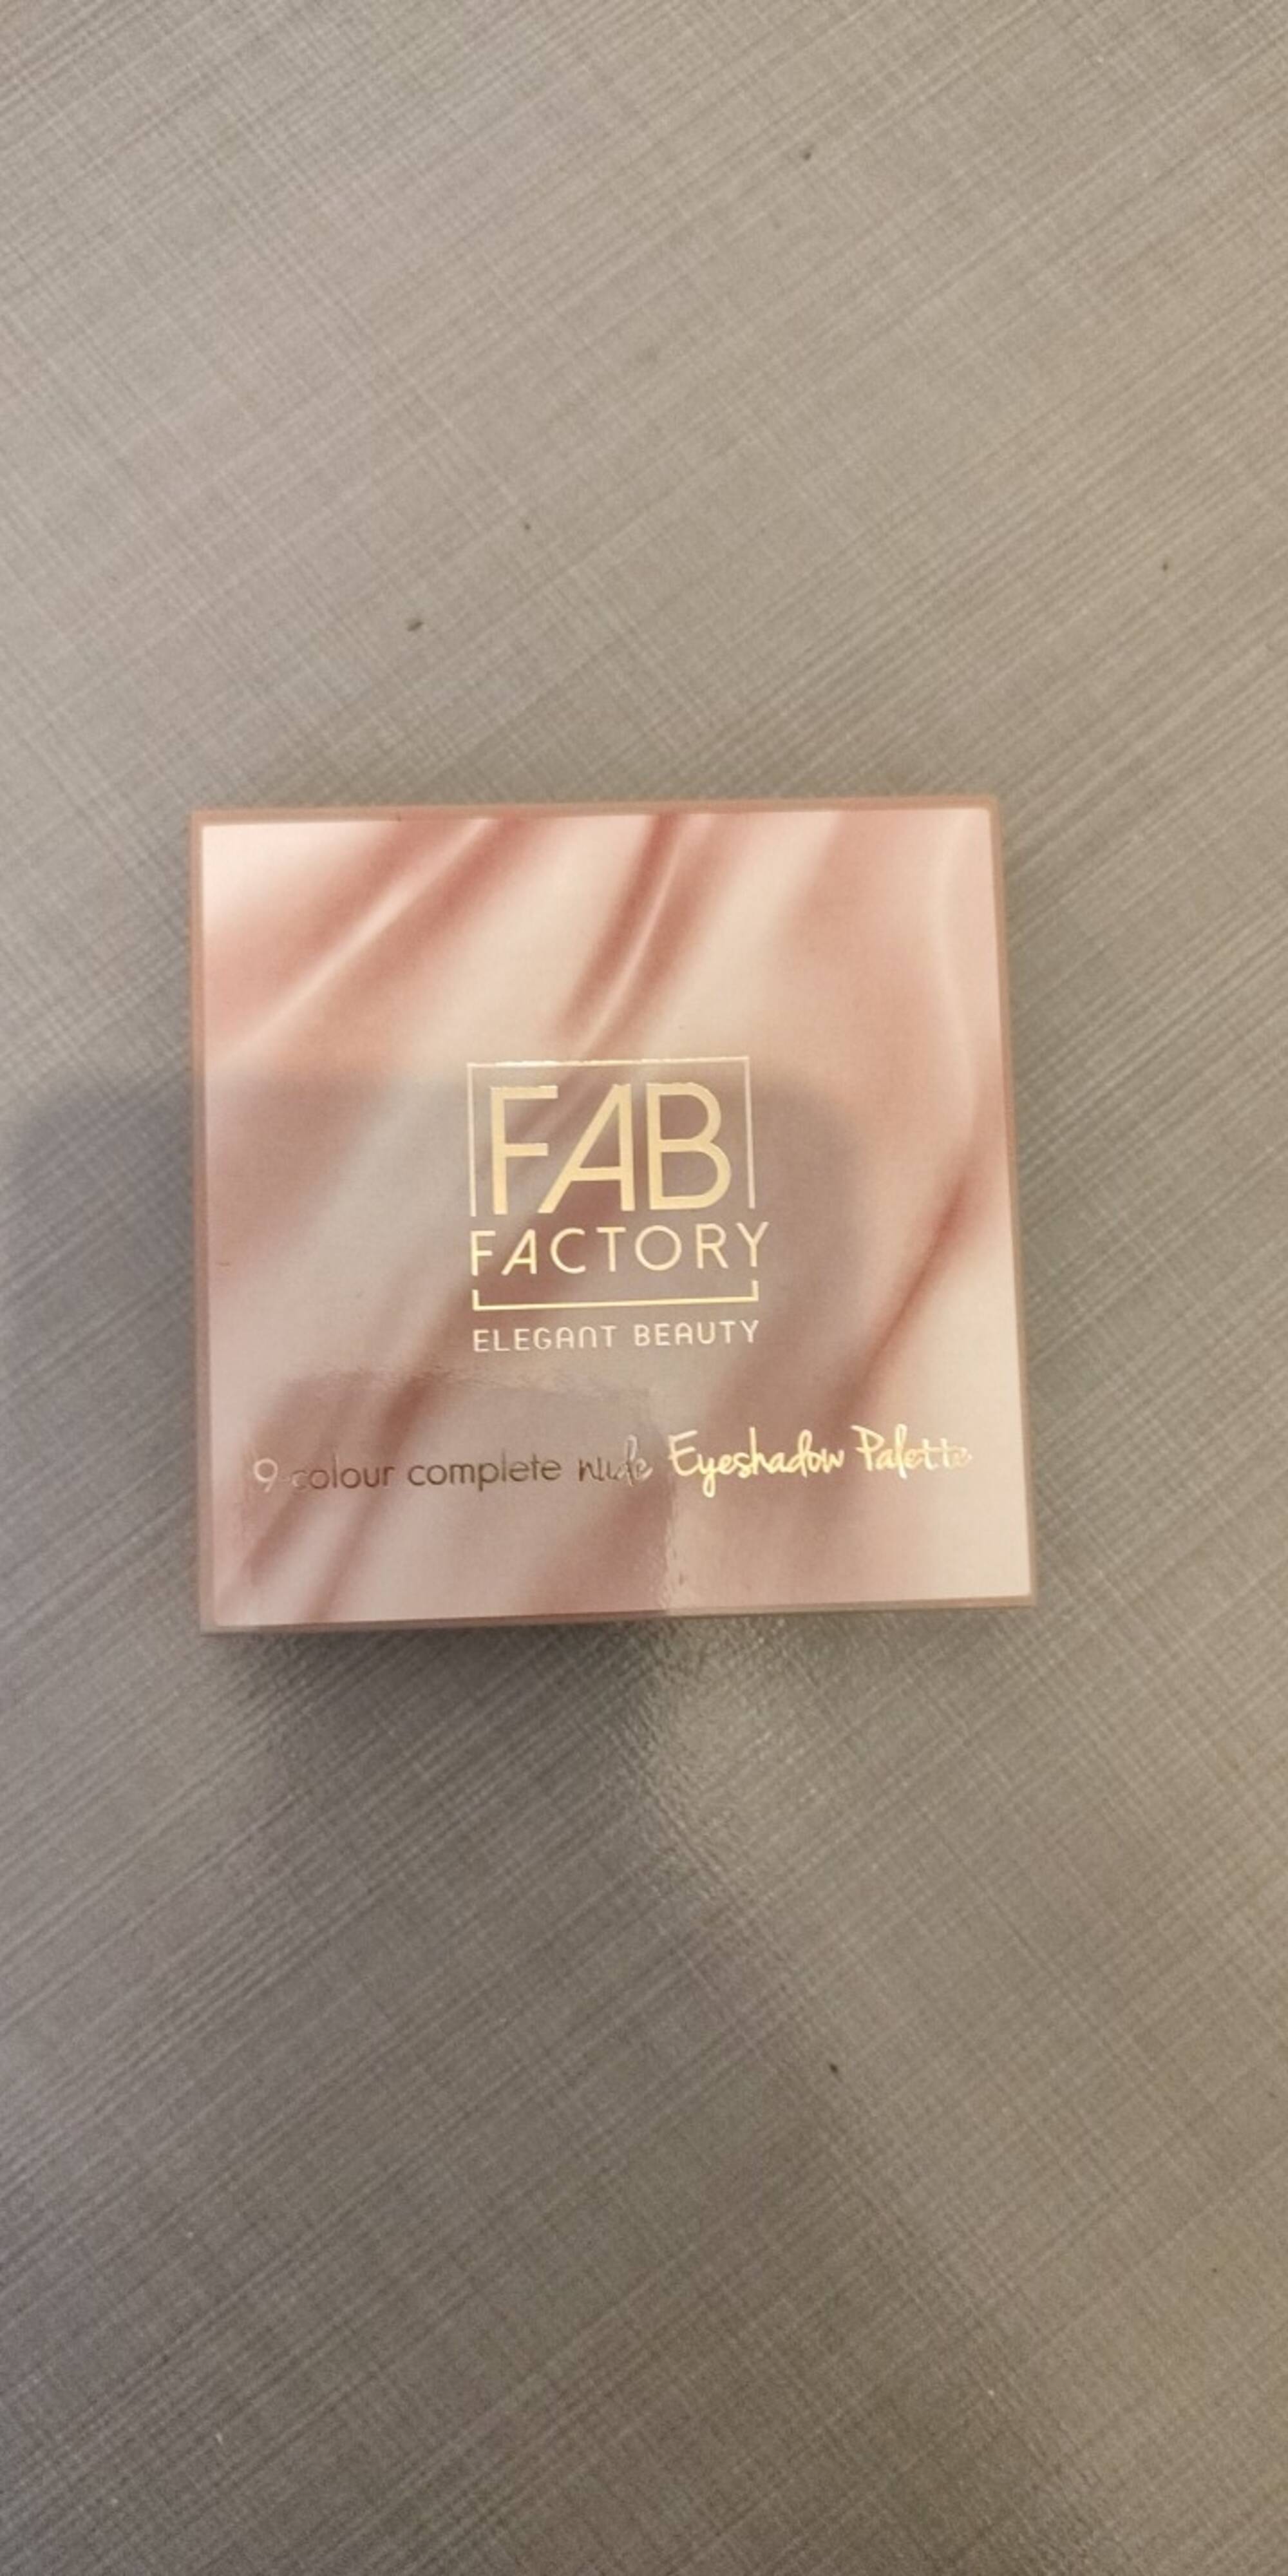 FAB FACTORY - Elegant beauty - Eyeshadow palette